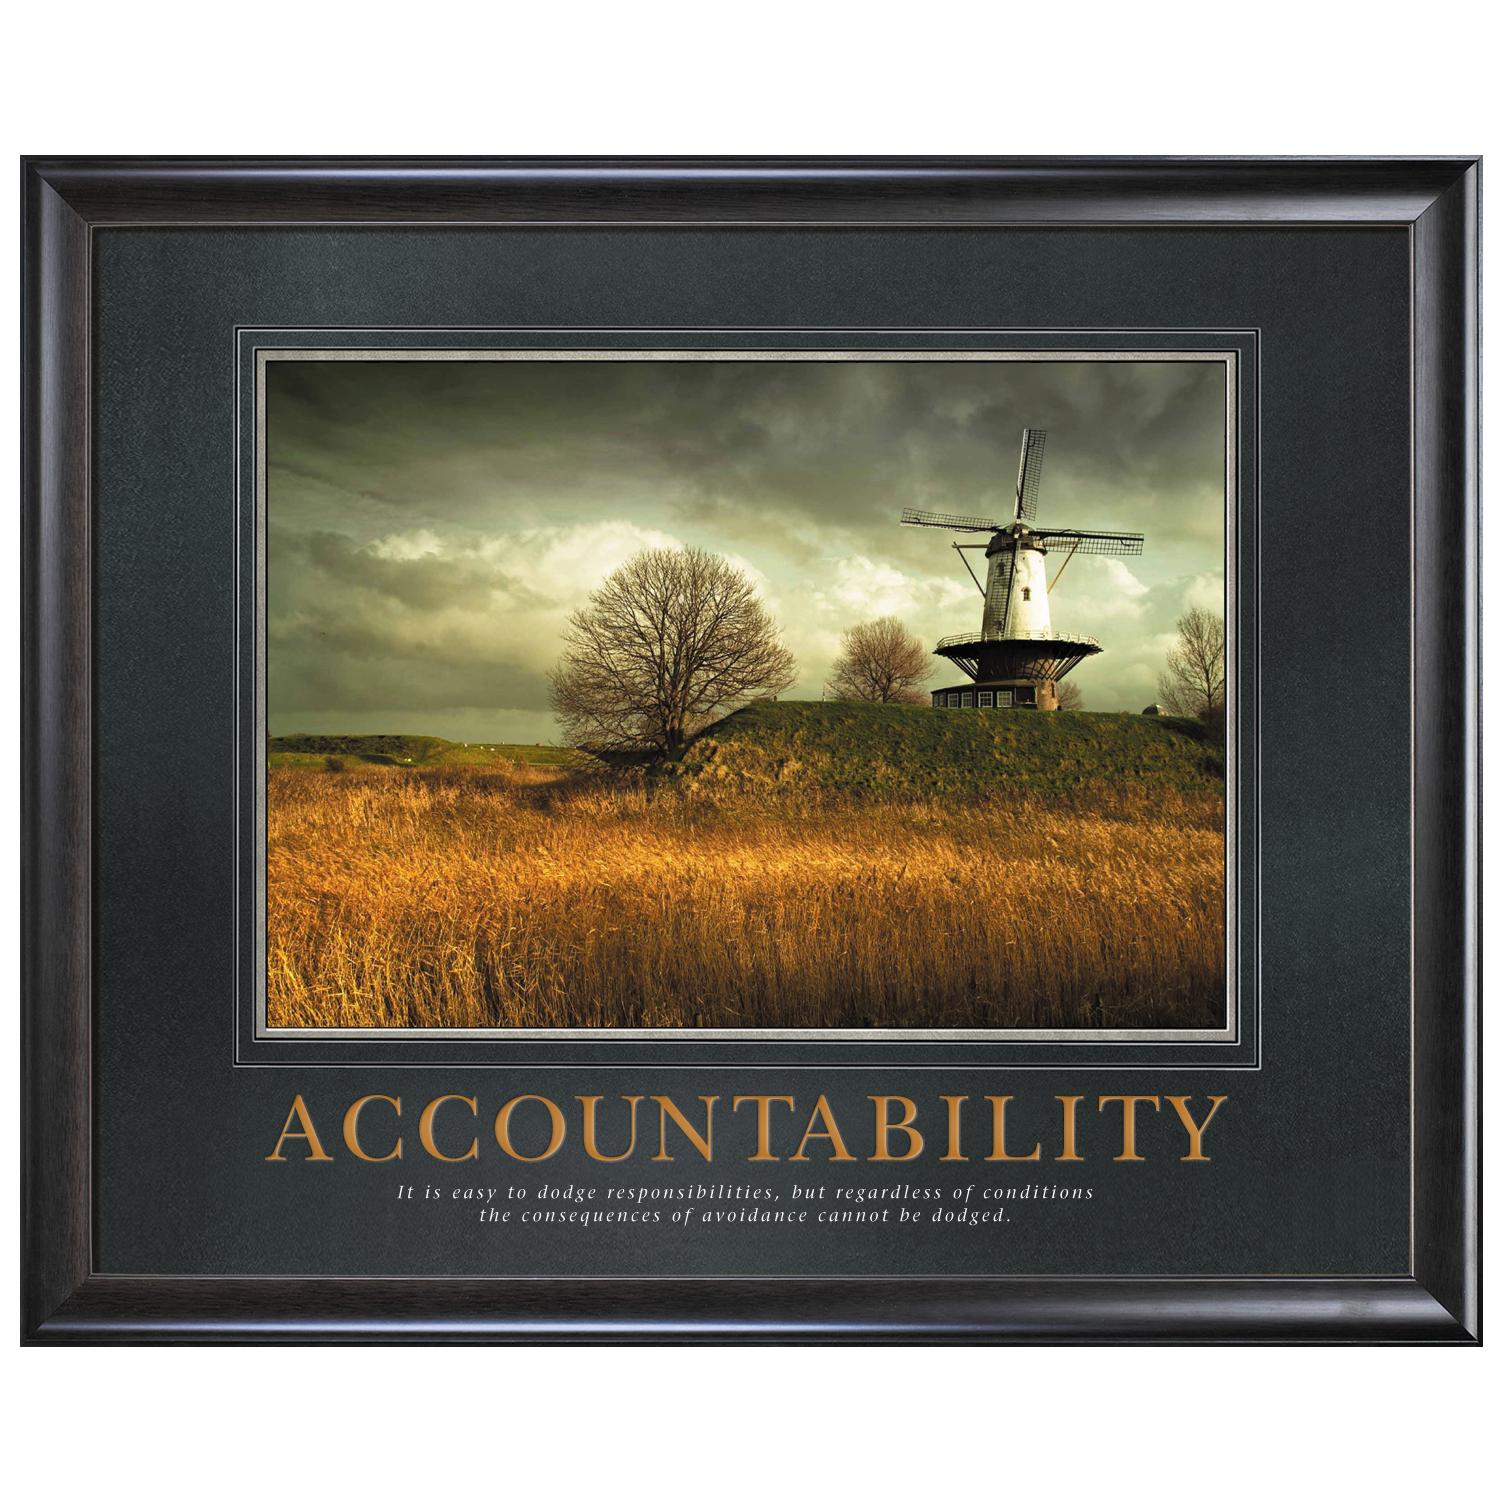 Employee Accountability Quotes. QuotesGram